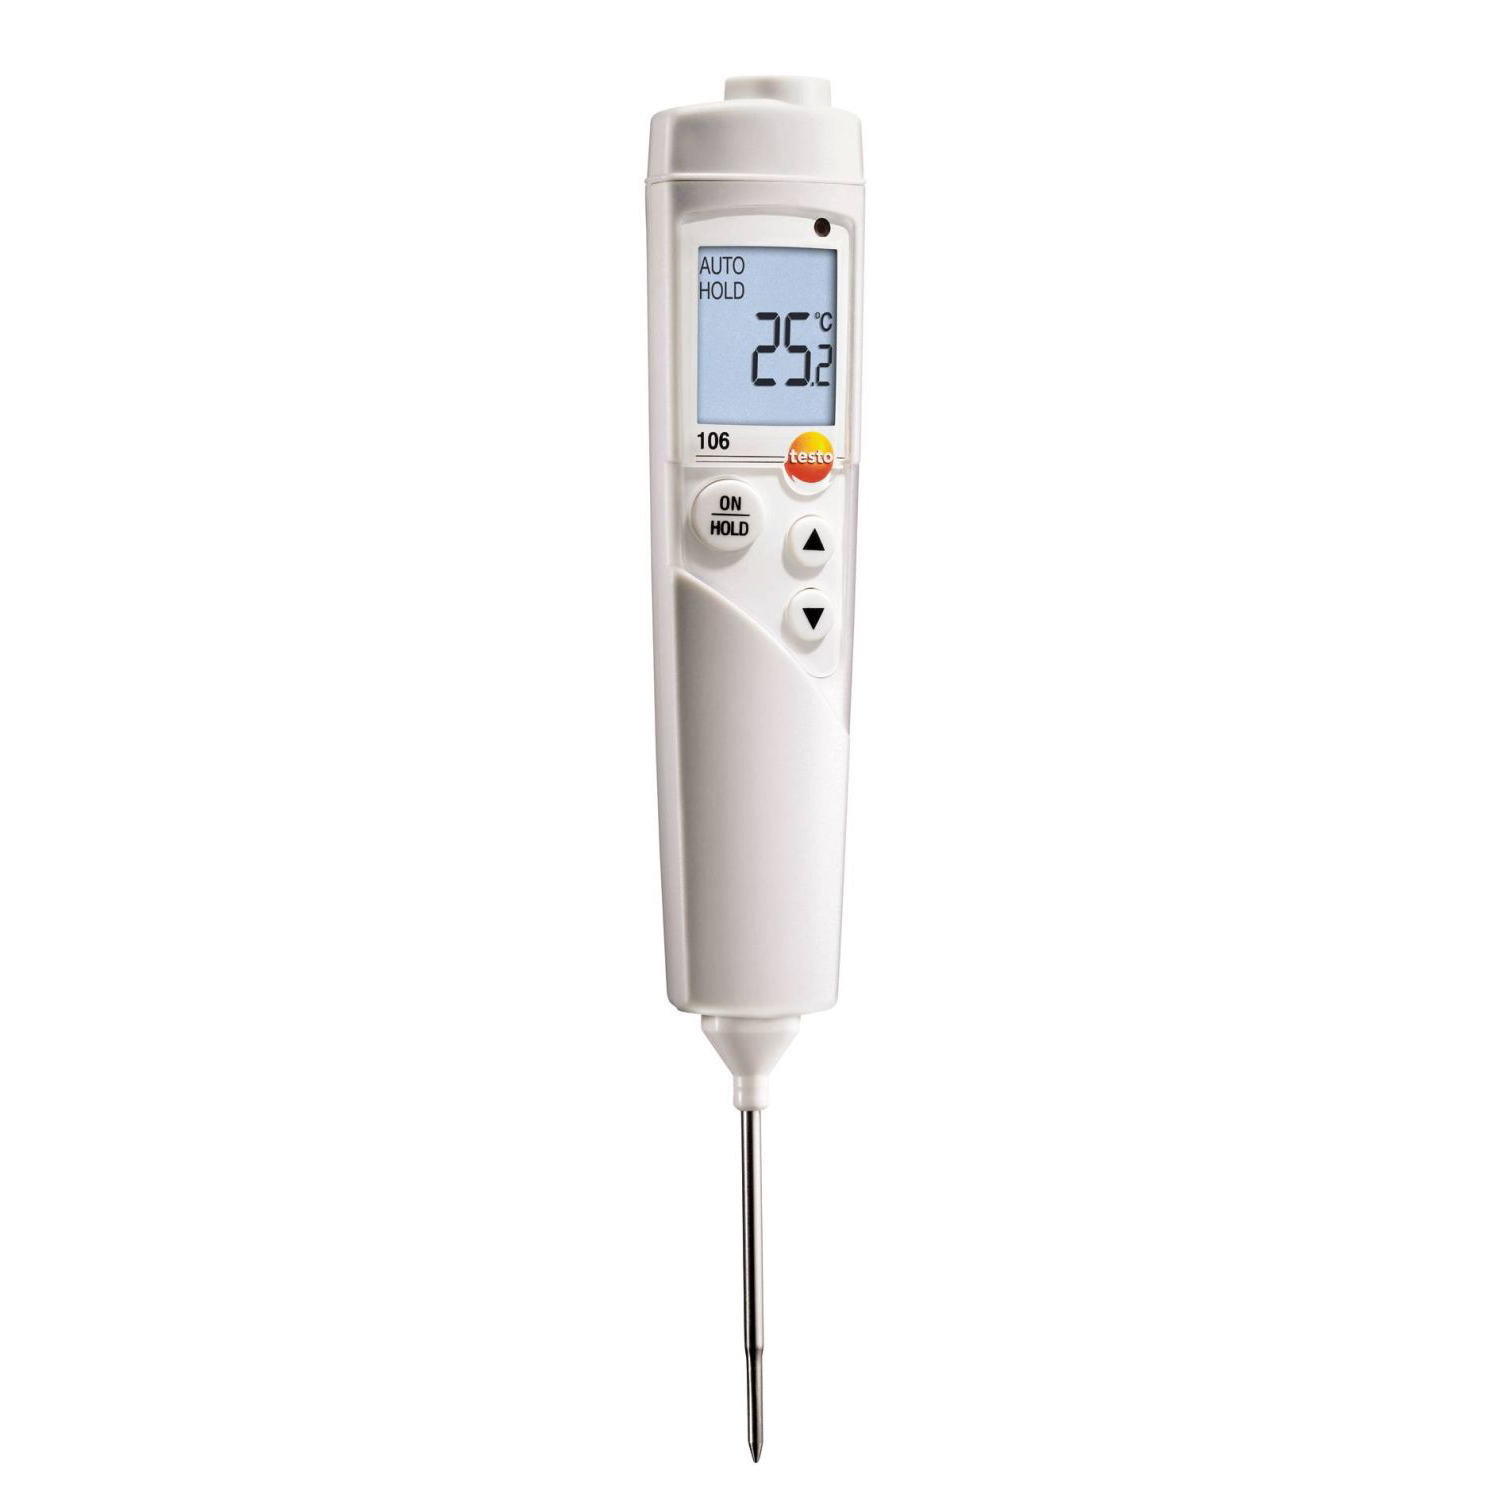 Testo 106 - Lebensmittel-Kern-Thermometer im Set - 0563 1063